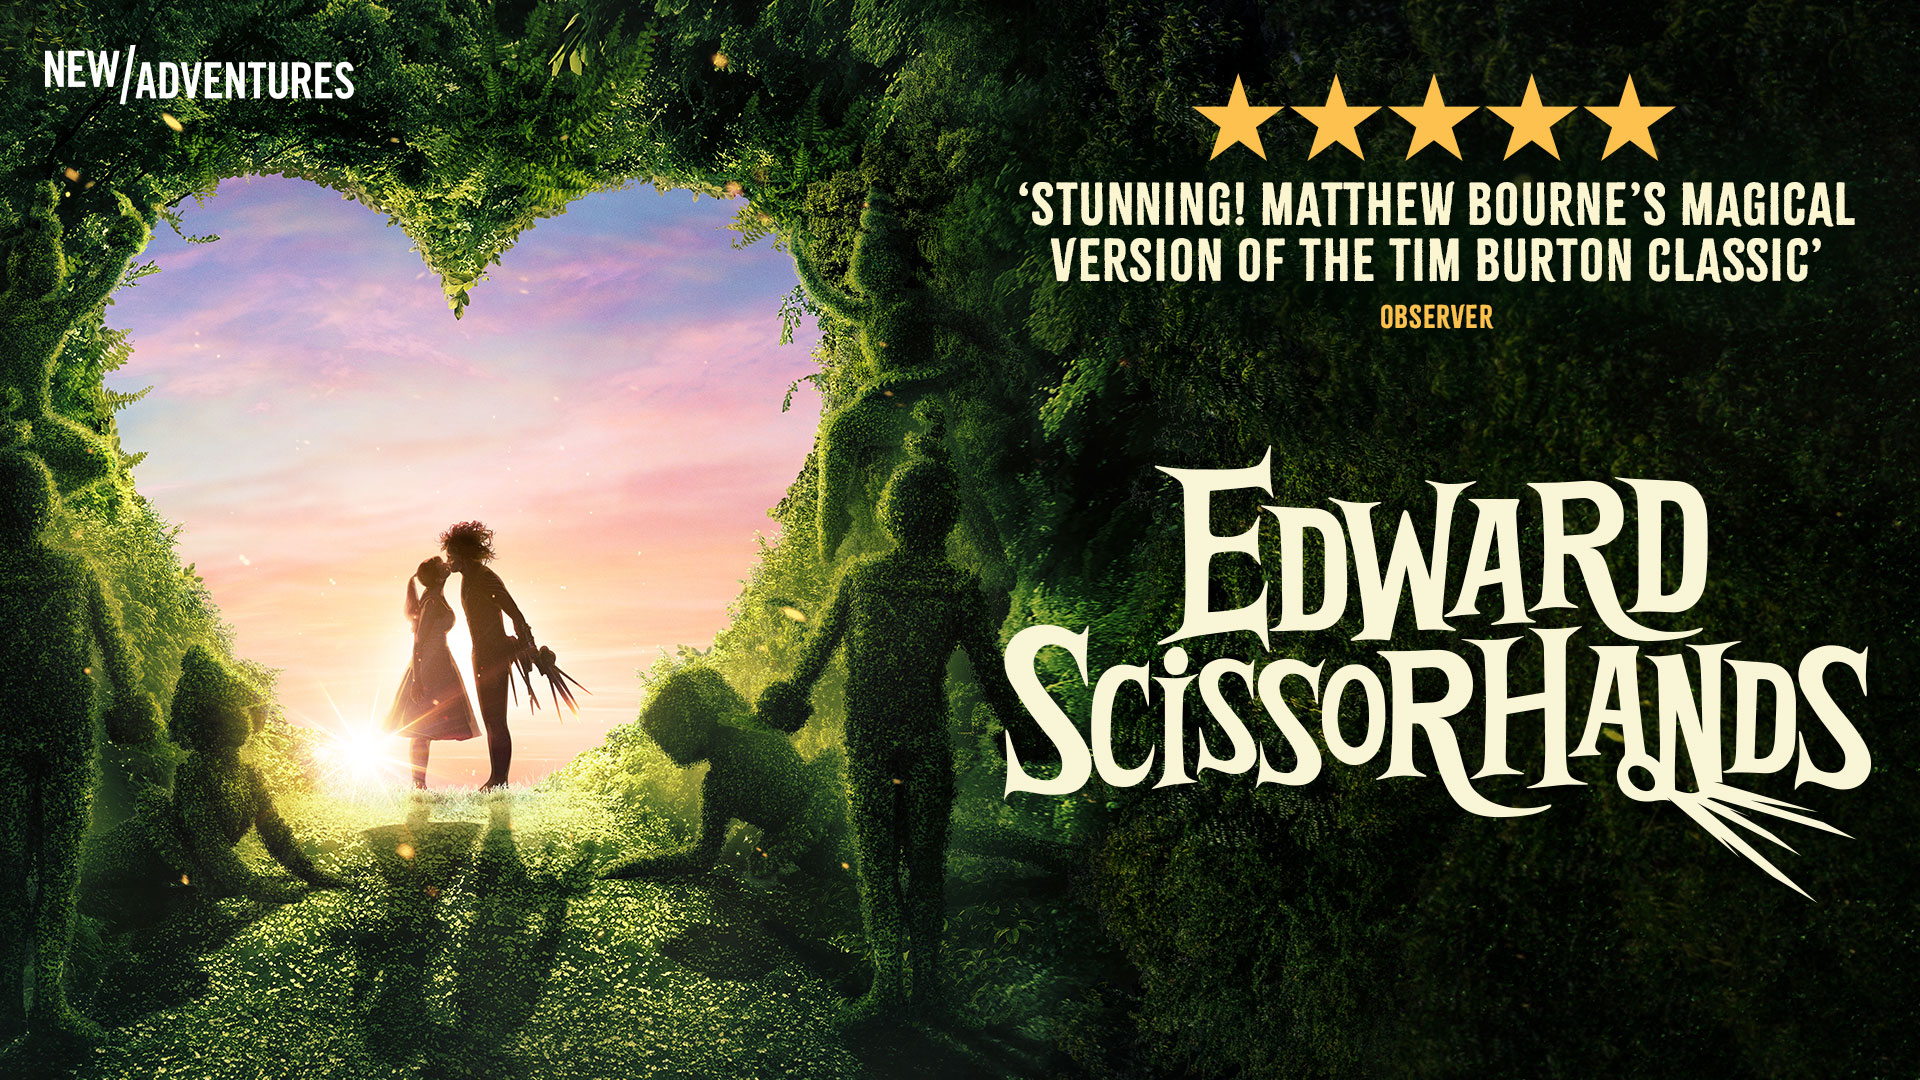 Poster to promote Edward Scissorhands at the Festival Theatre in Edinburgh